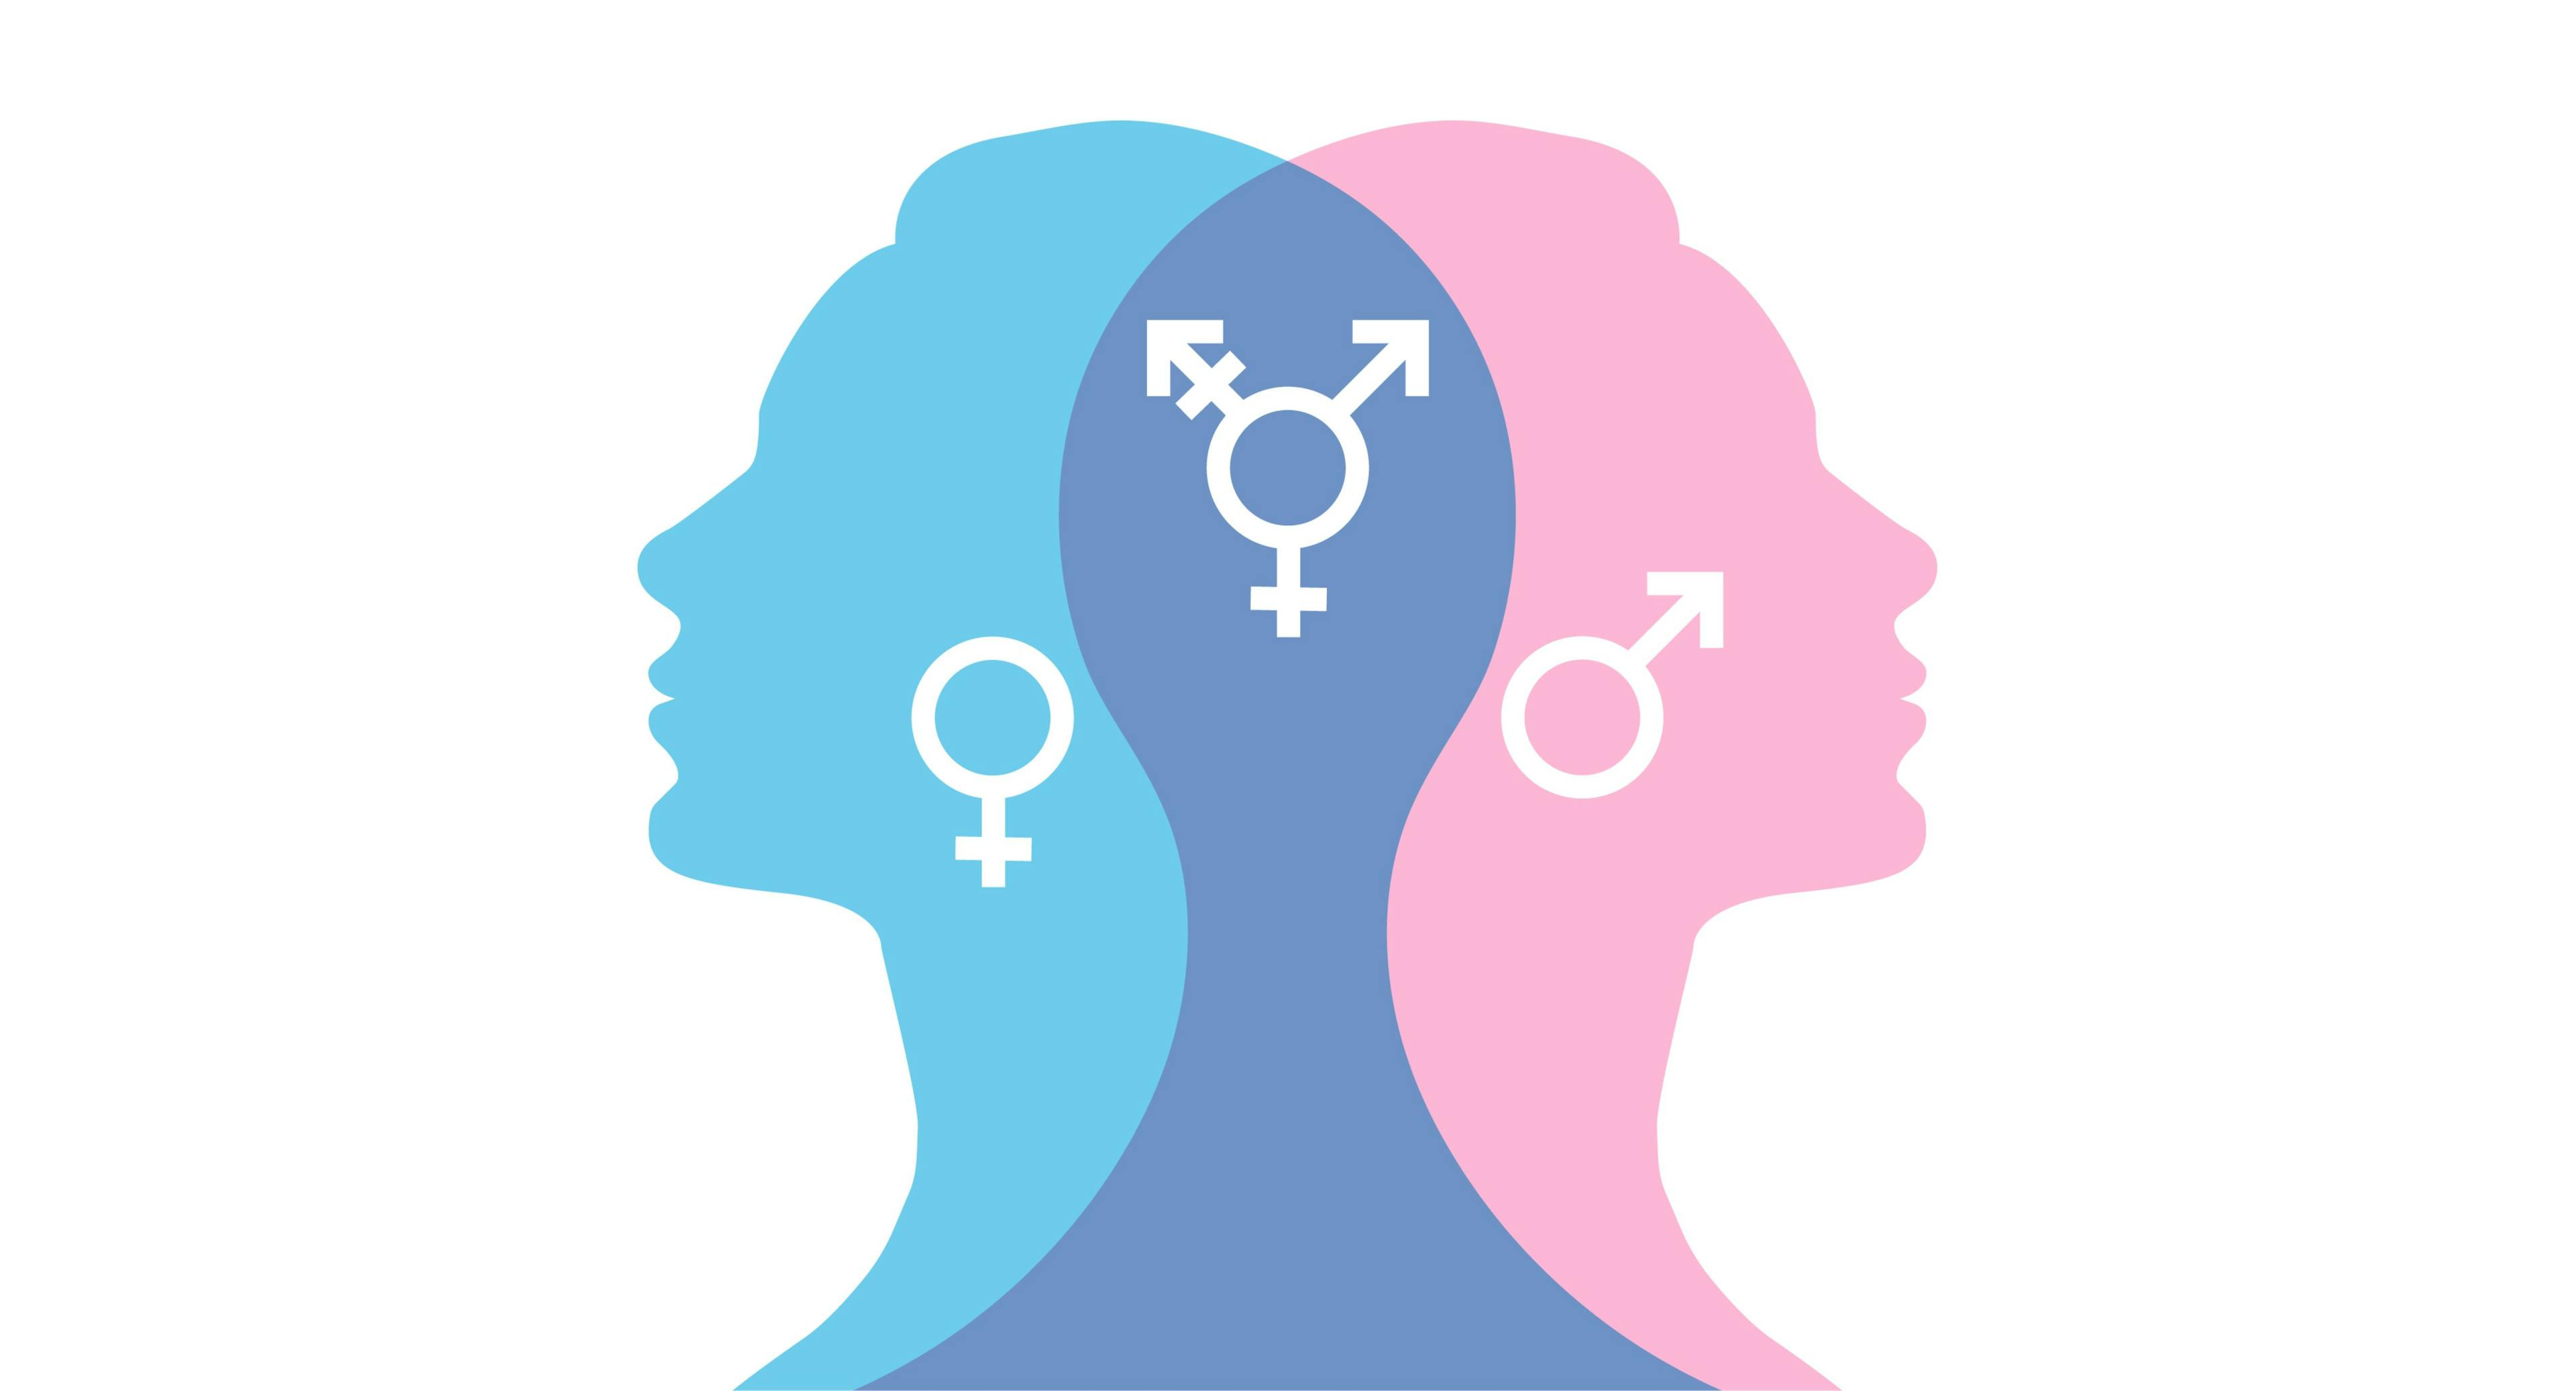 Symbols of the gender spectrum | Image credit: Olga Tsikarishvili – stock.adobe.com